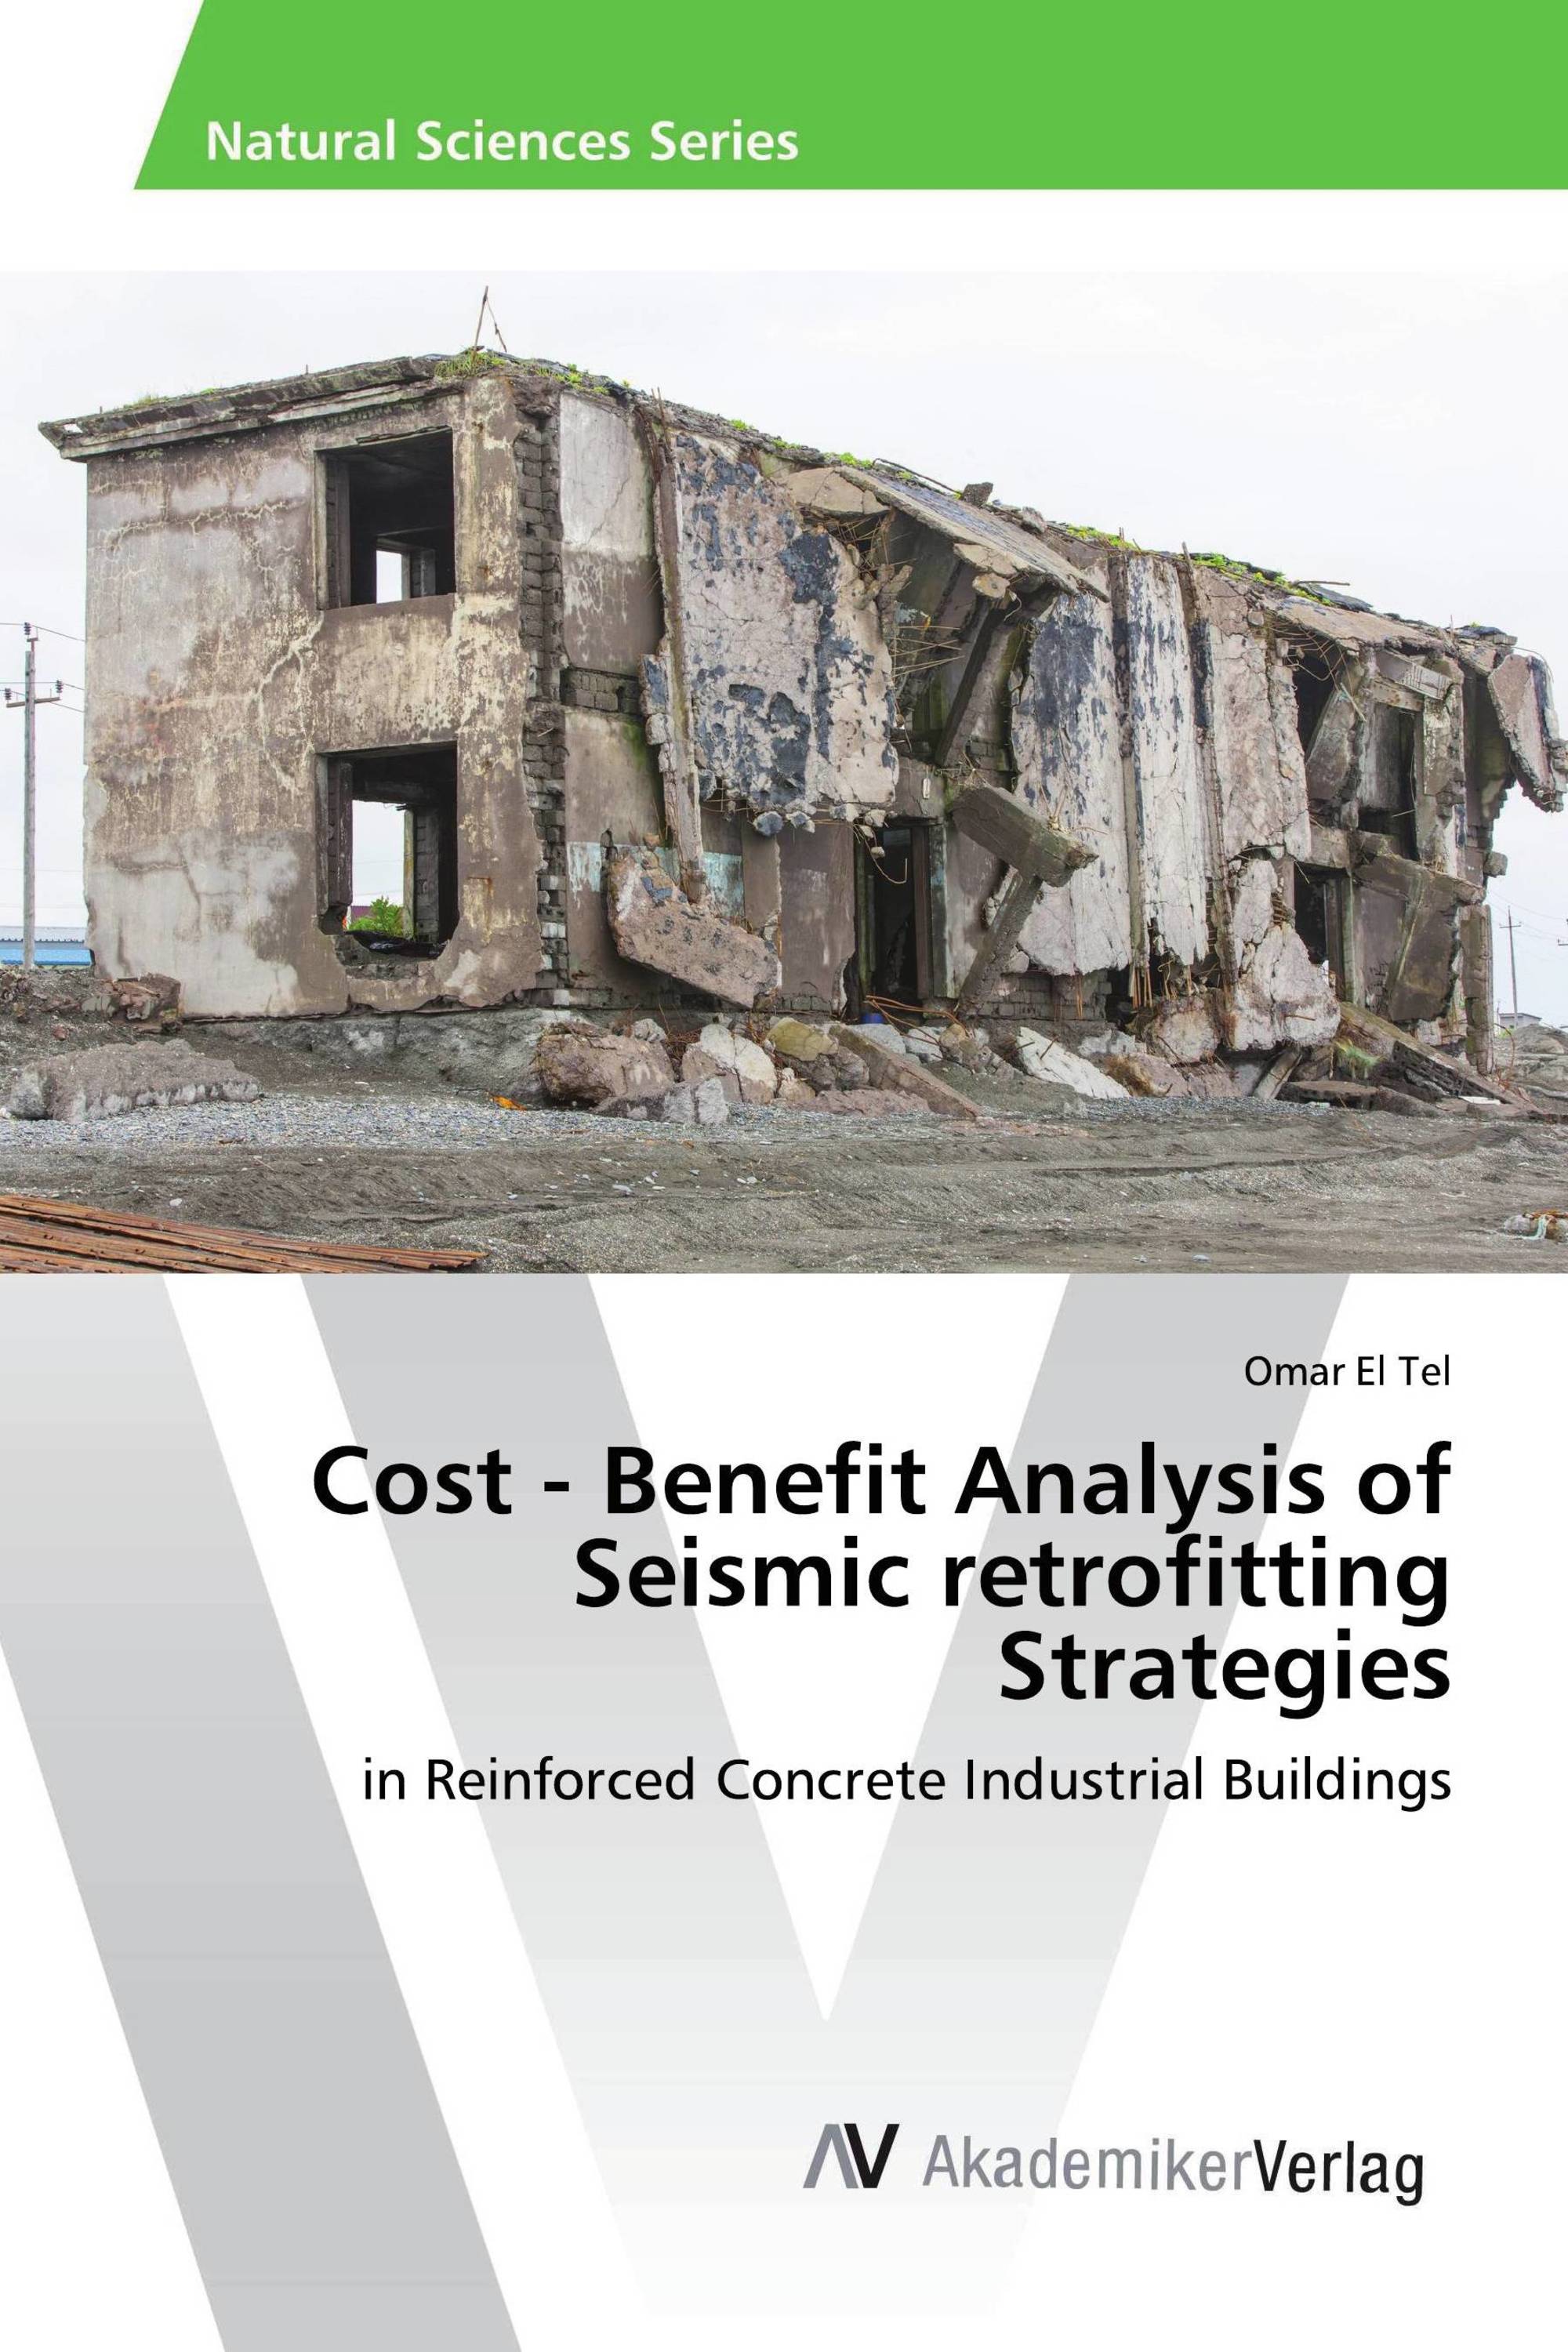 Cost - Benefit Analysis of Seismic retrofitting Strategies